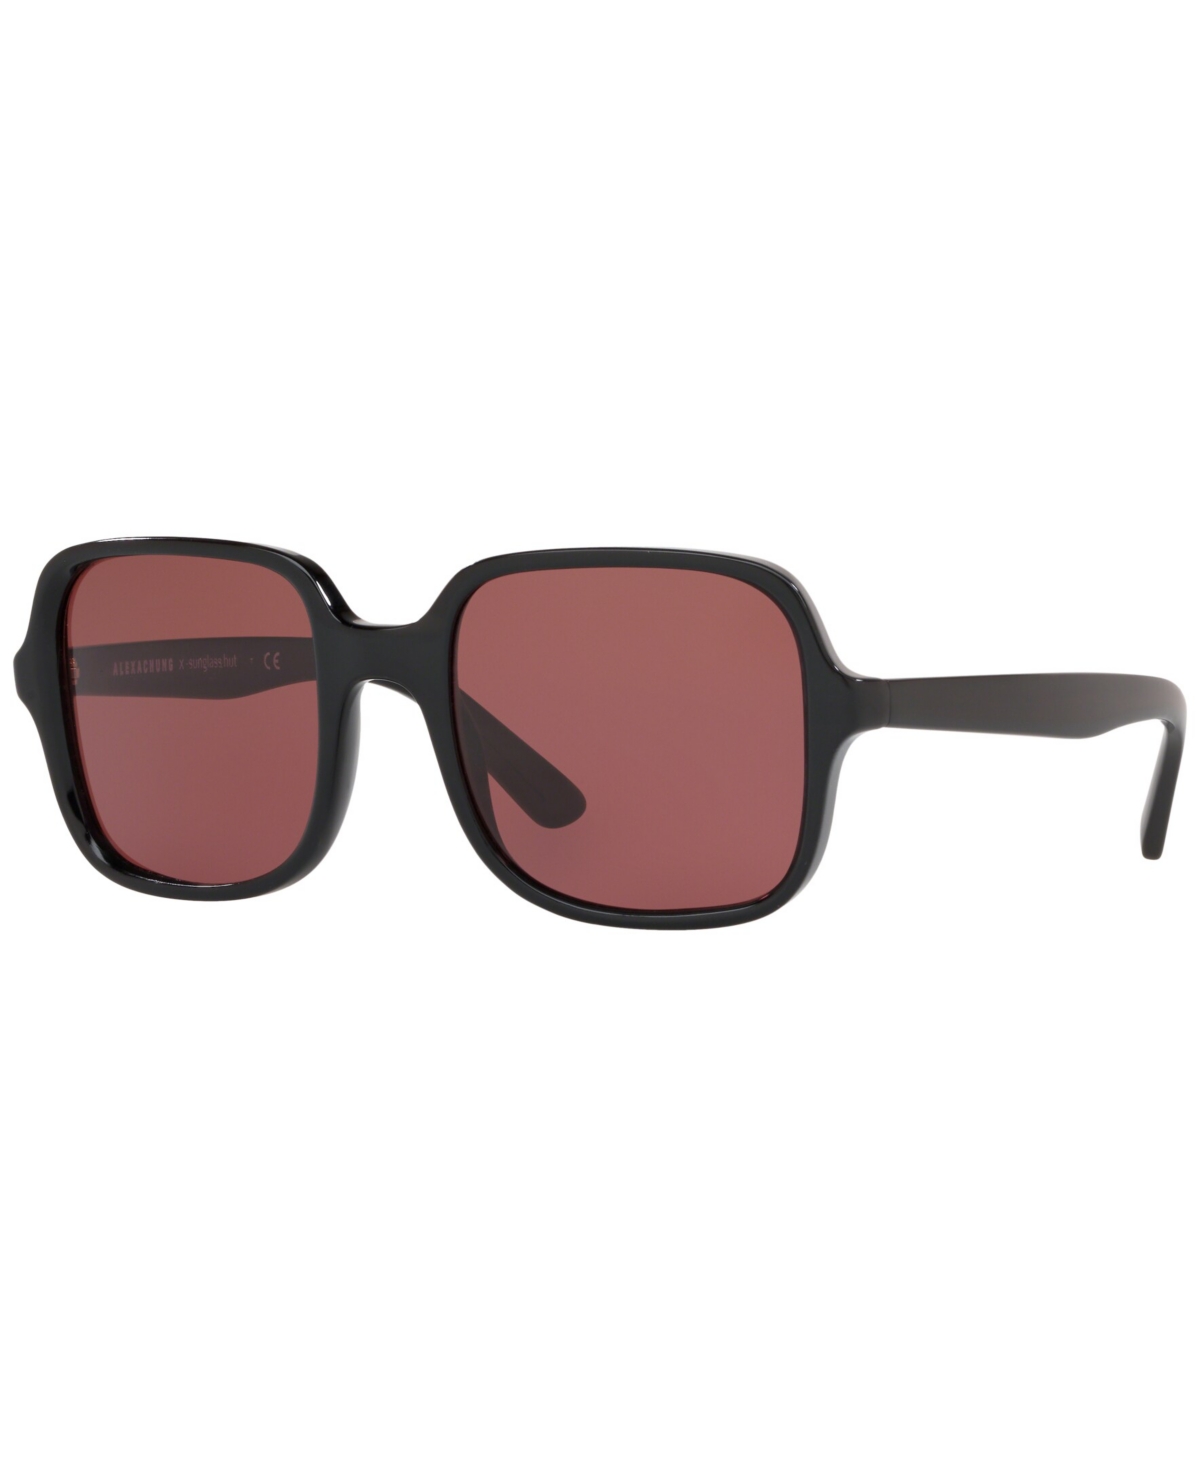 Women's Sunglasses, HU4005 - Black